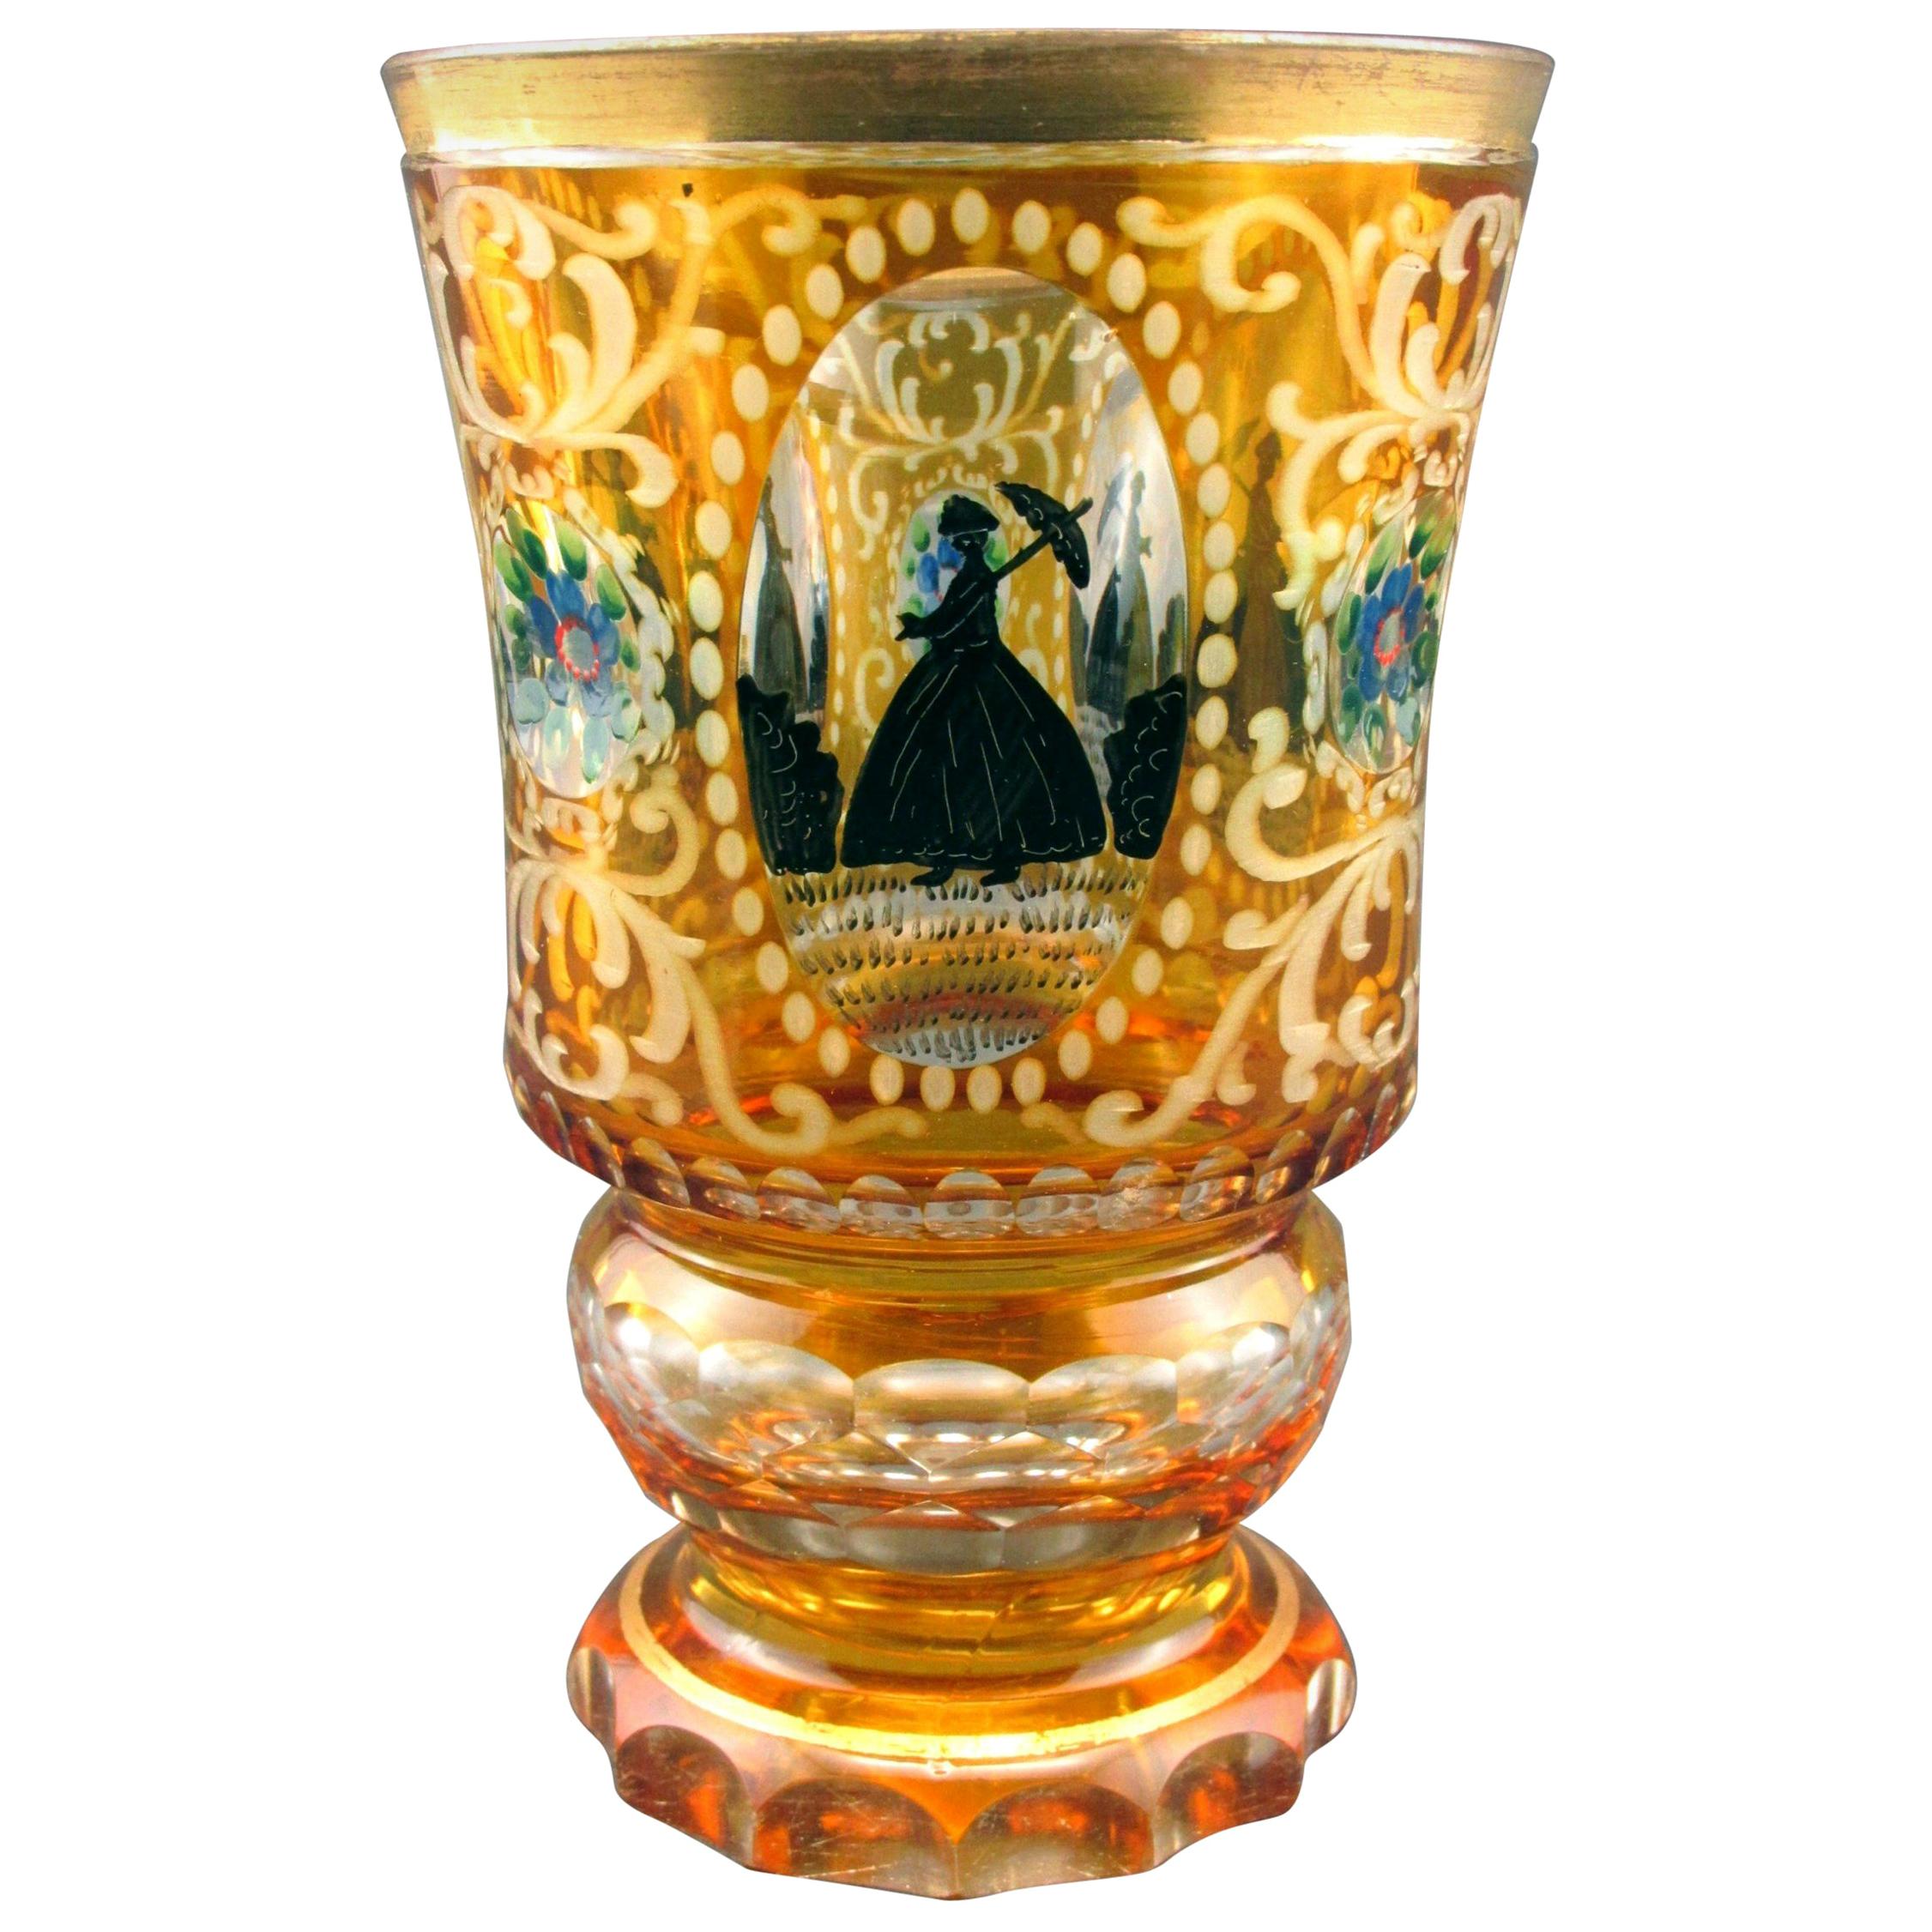 Very Good 19th Century Bohemian Enamelled Glass Beaker, Circa 1870